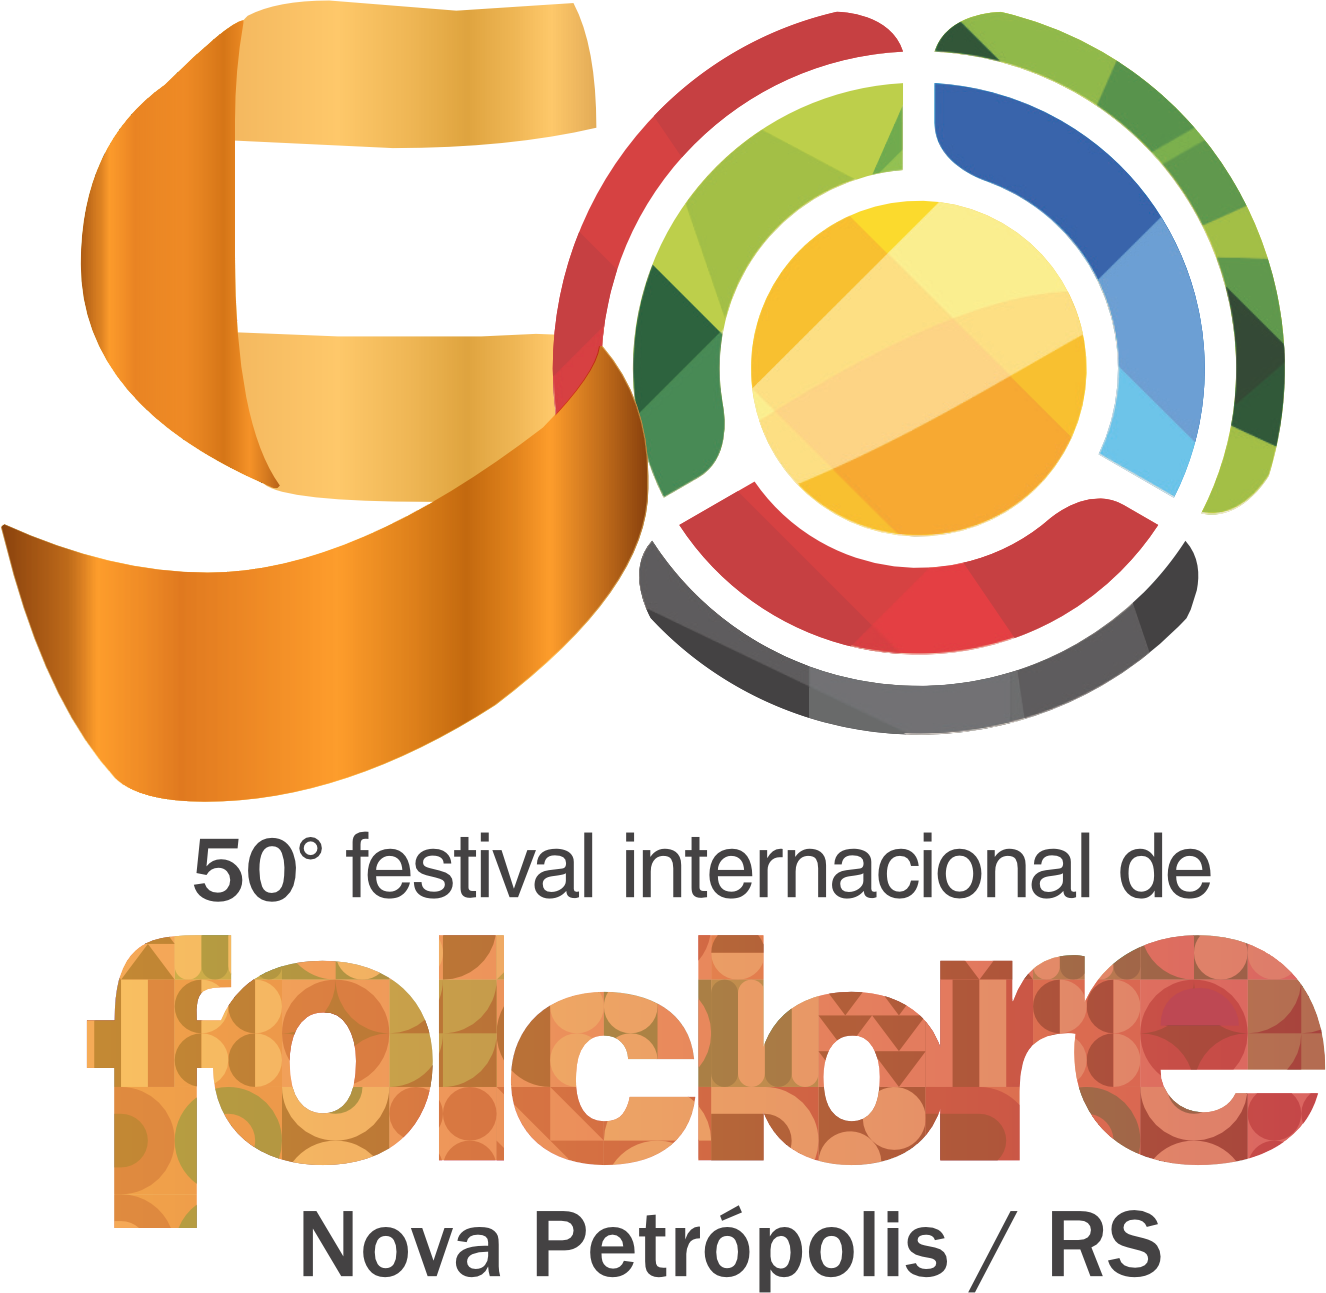 Logotipo Festival de Folclore